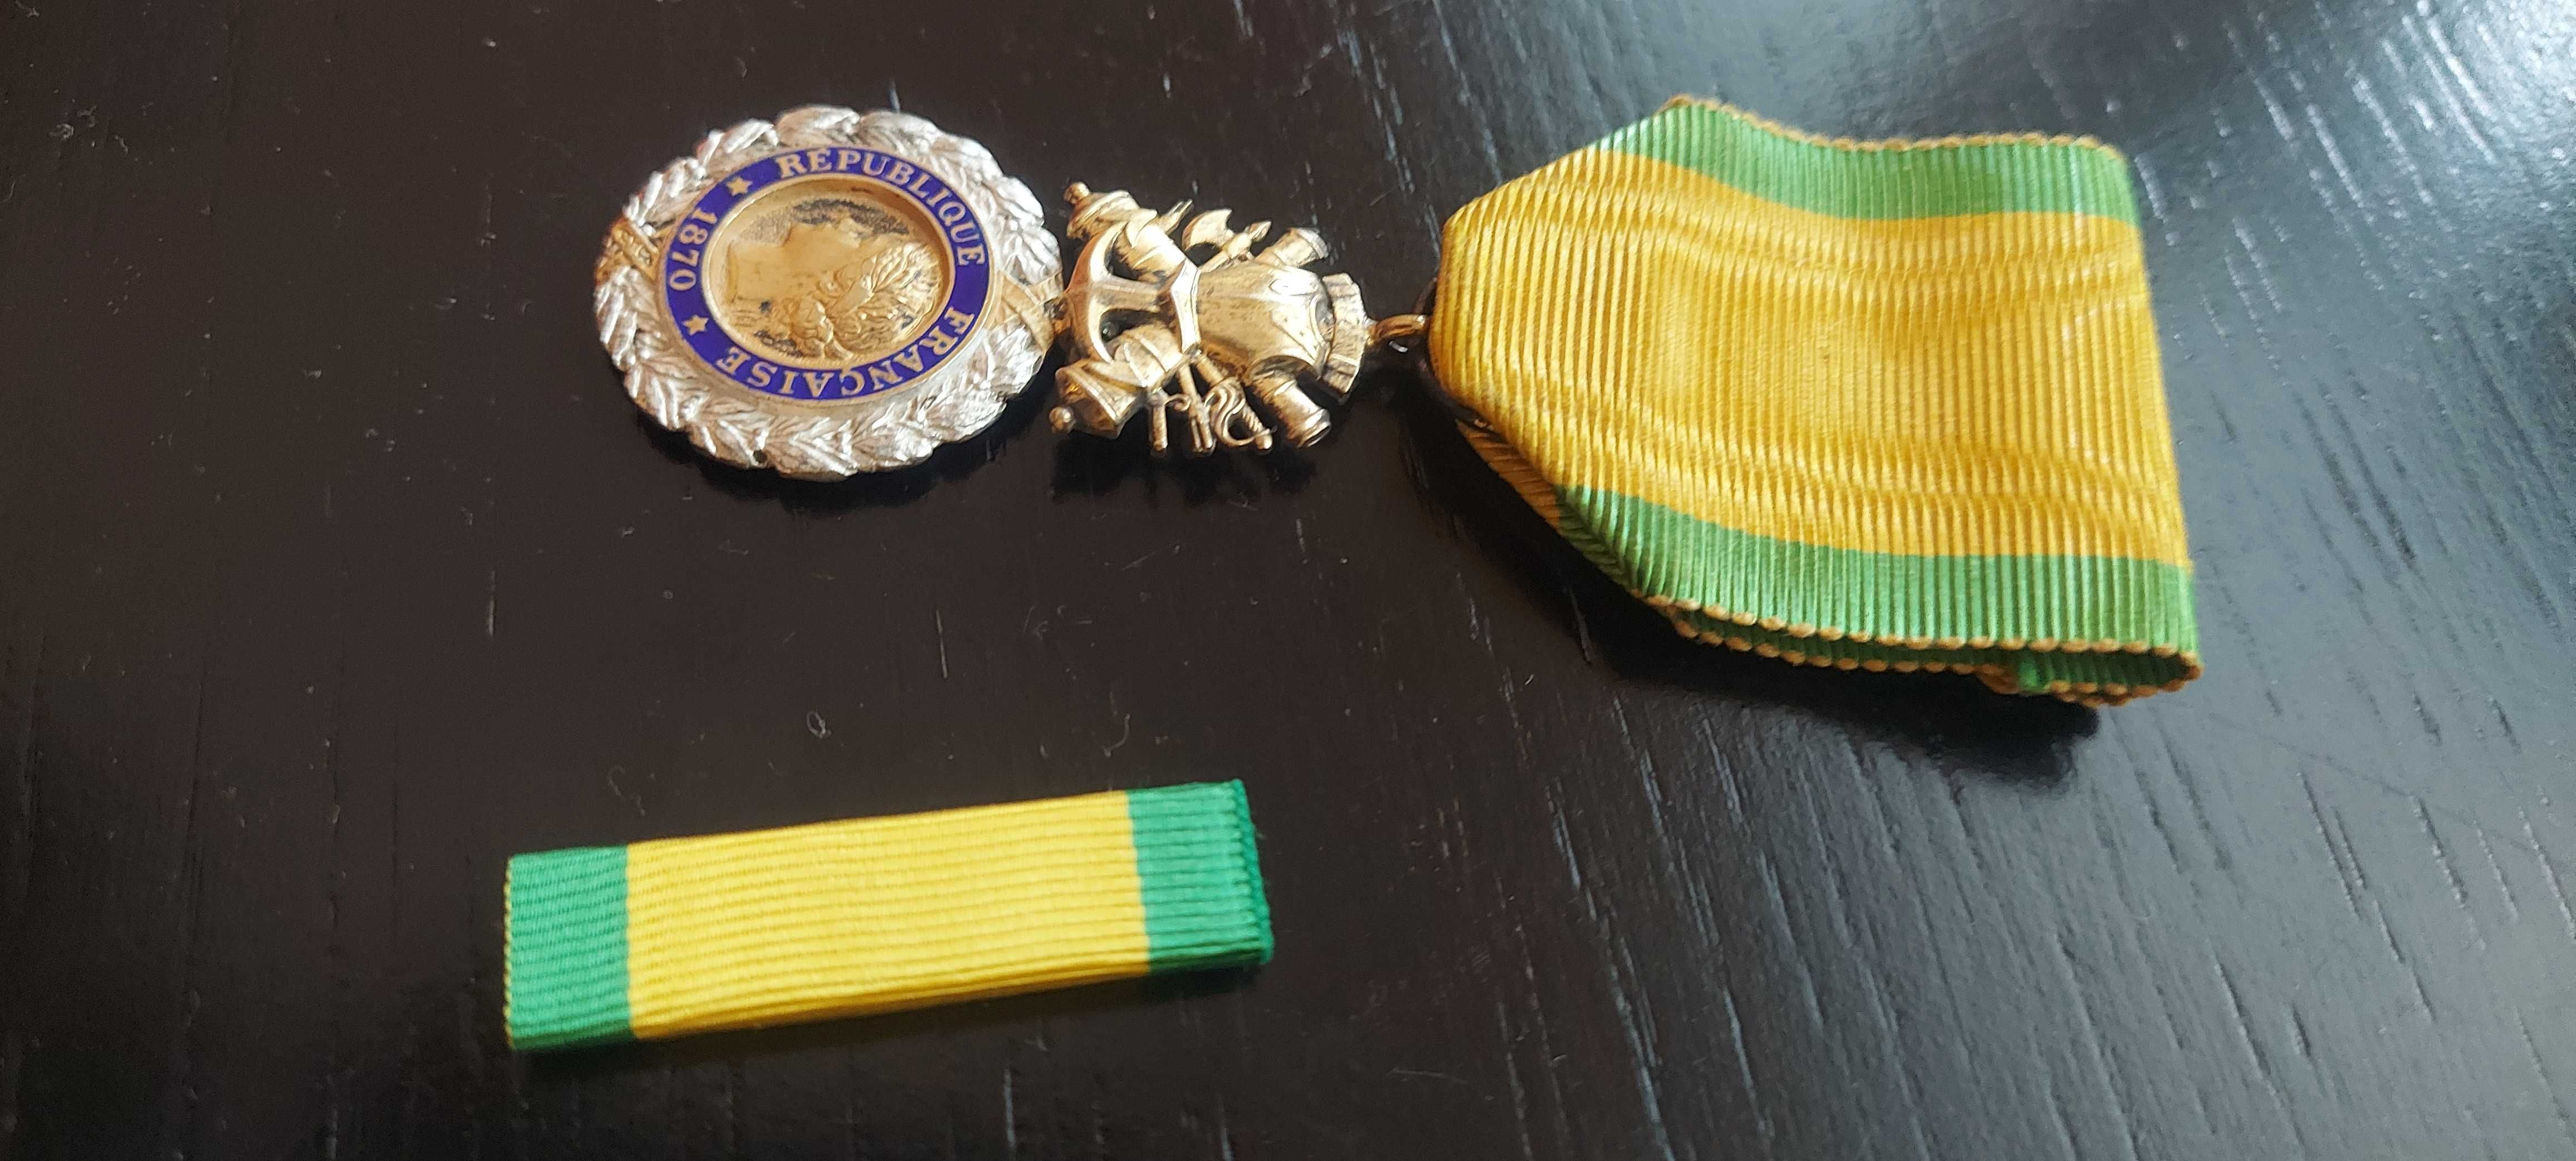 Medalia militara 1870, valoare si disciplina, Franta